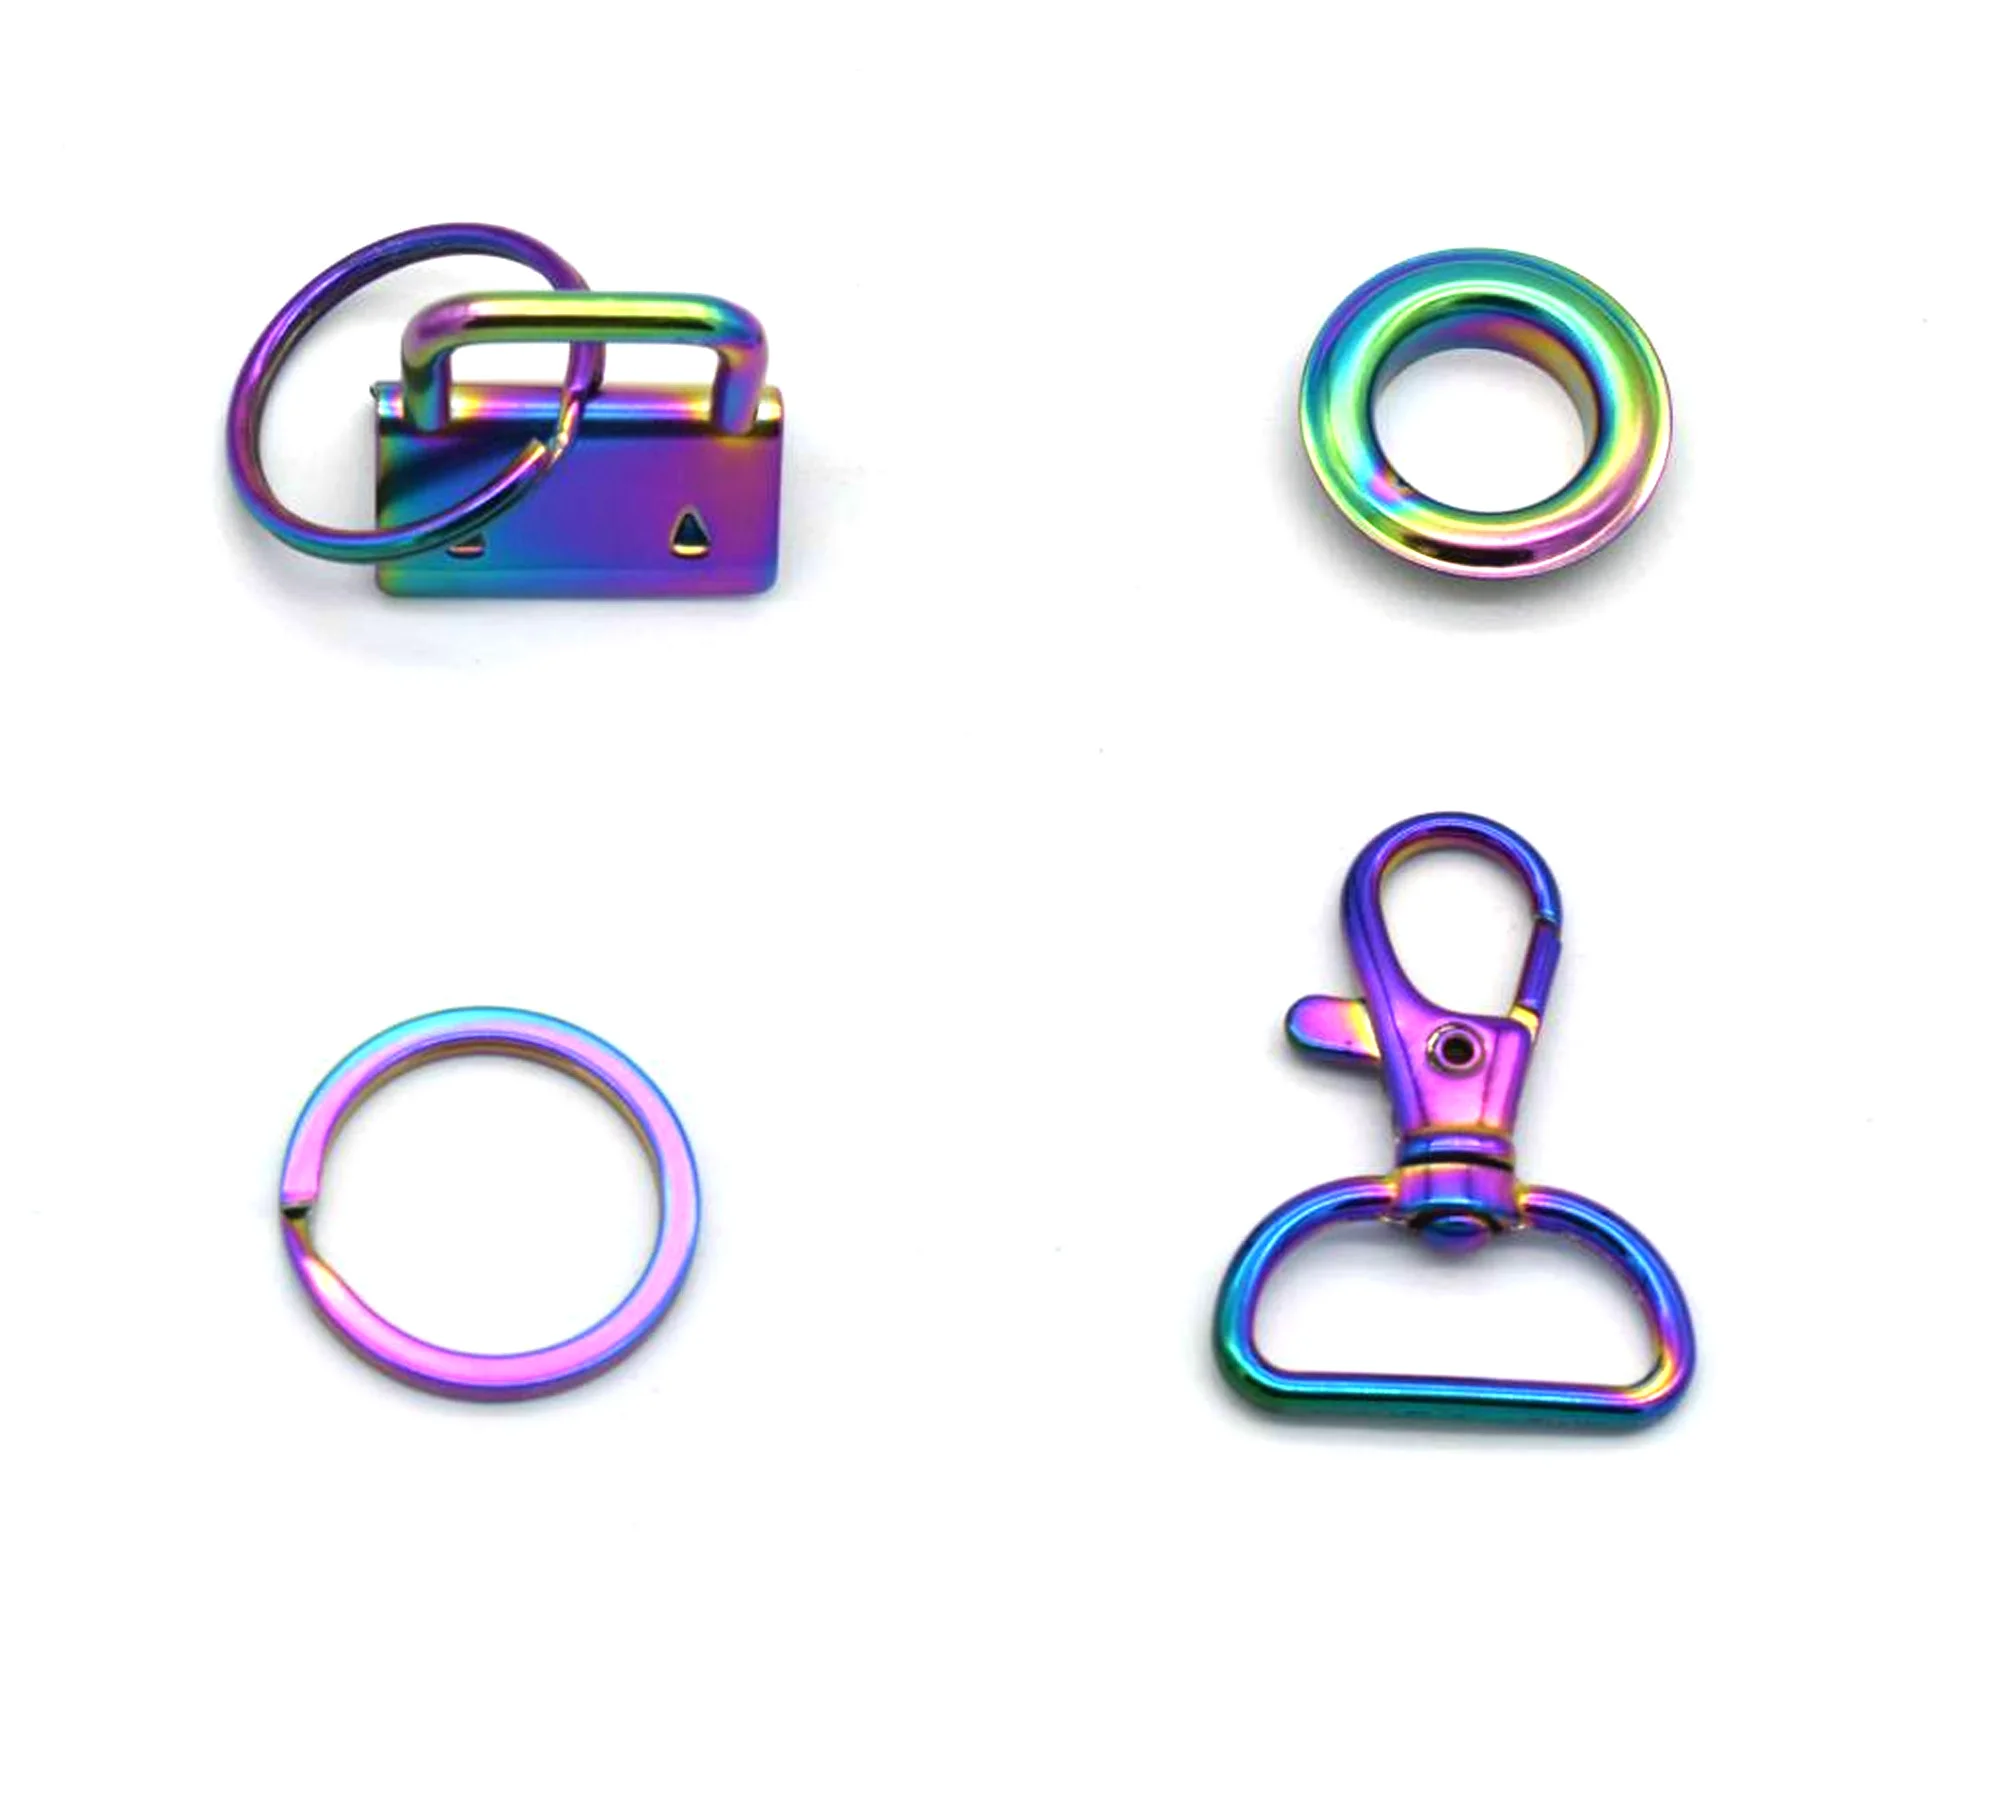 

Rainbow Pin Buckle Adjustable Buckle Eyelets Key Fob Metal Release Rectangular Buckle for Belt Sliding Buckle DIY Accessories